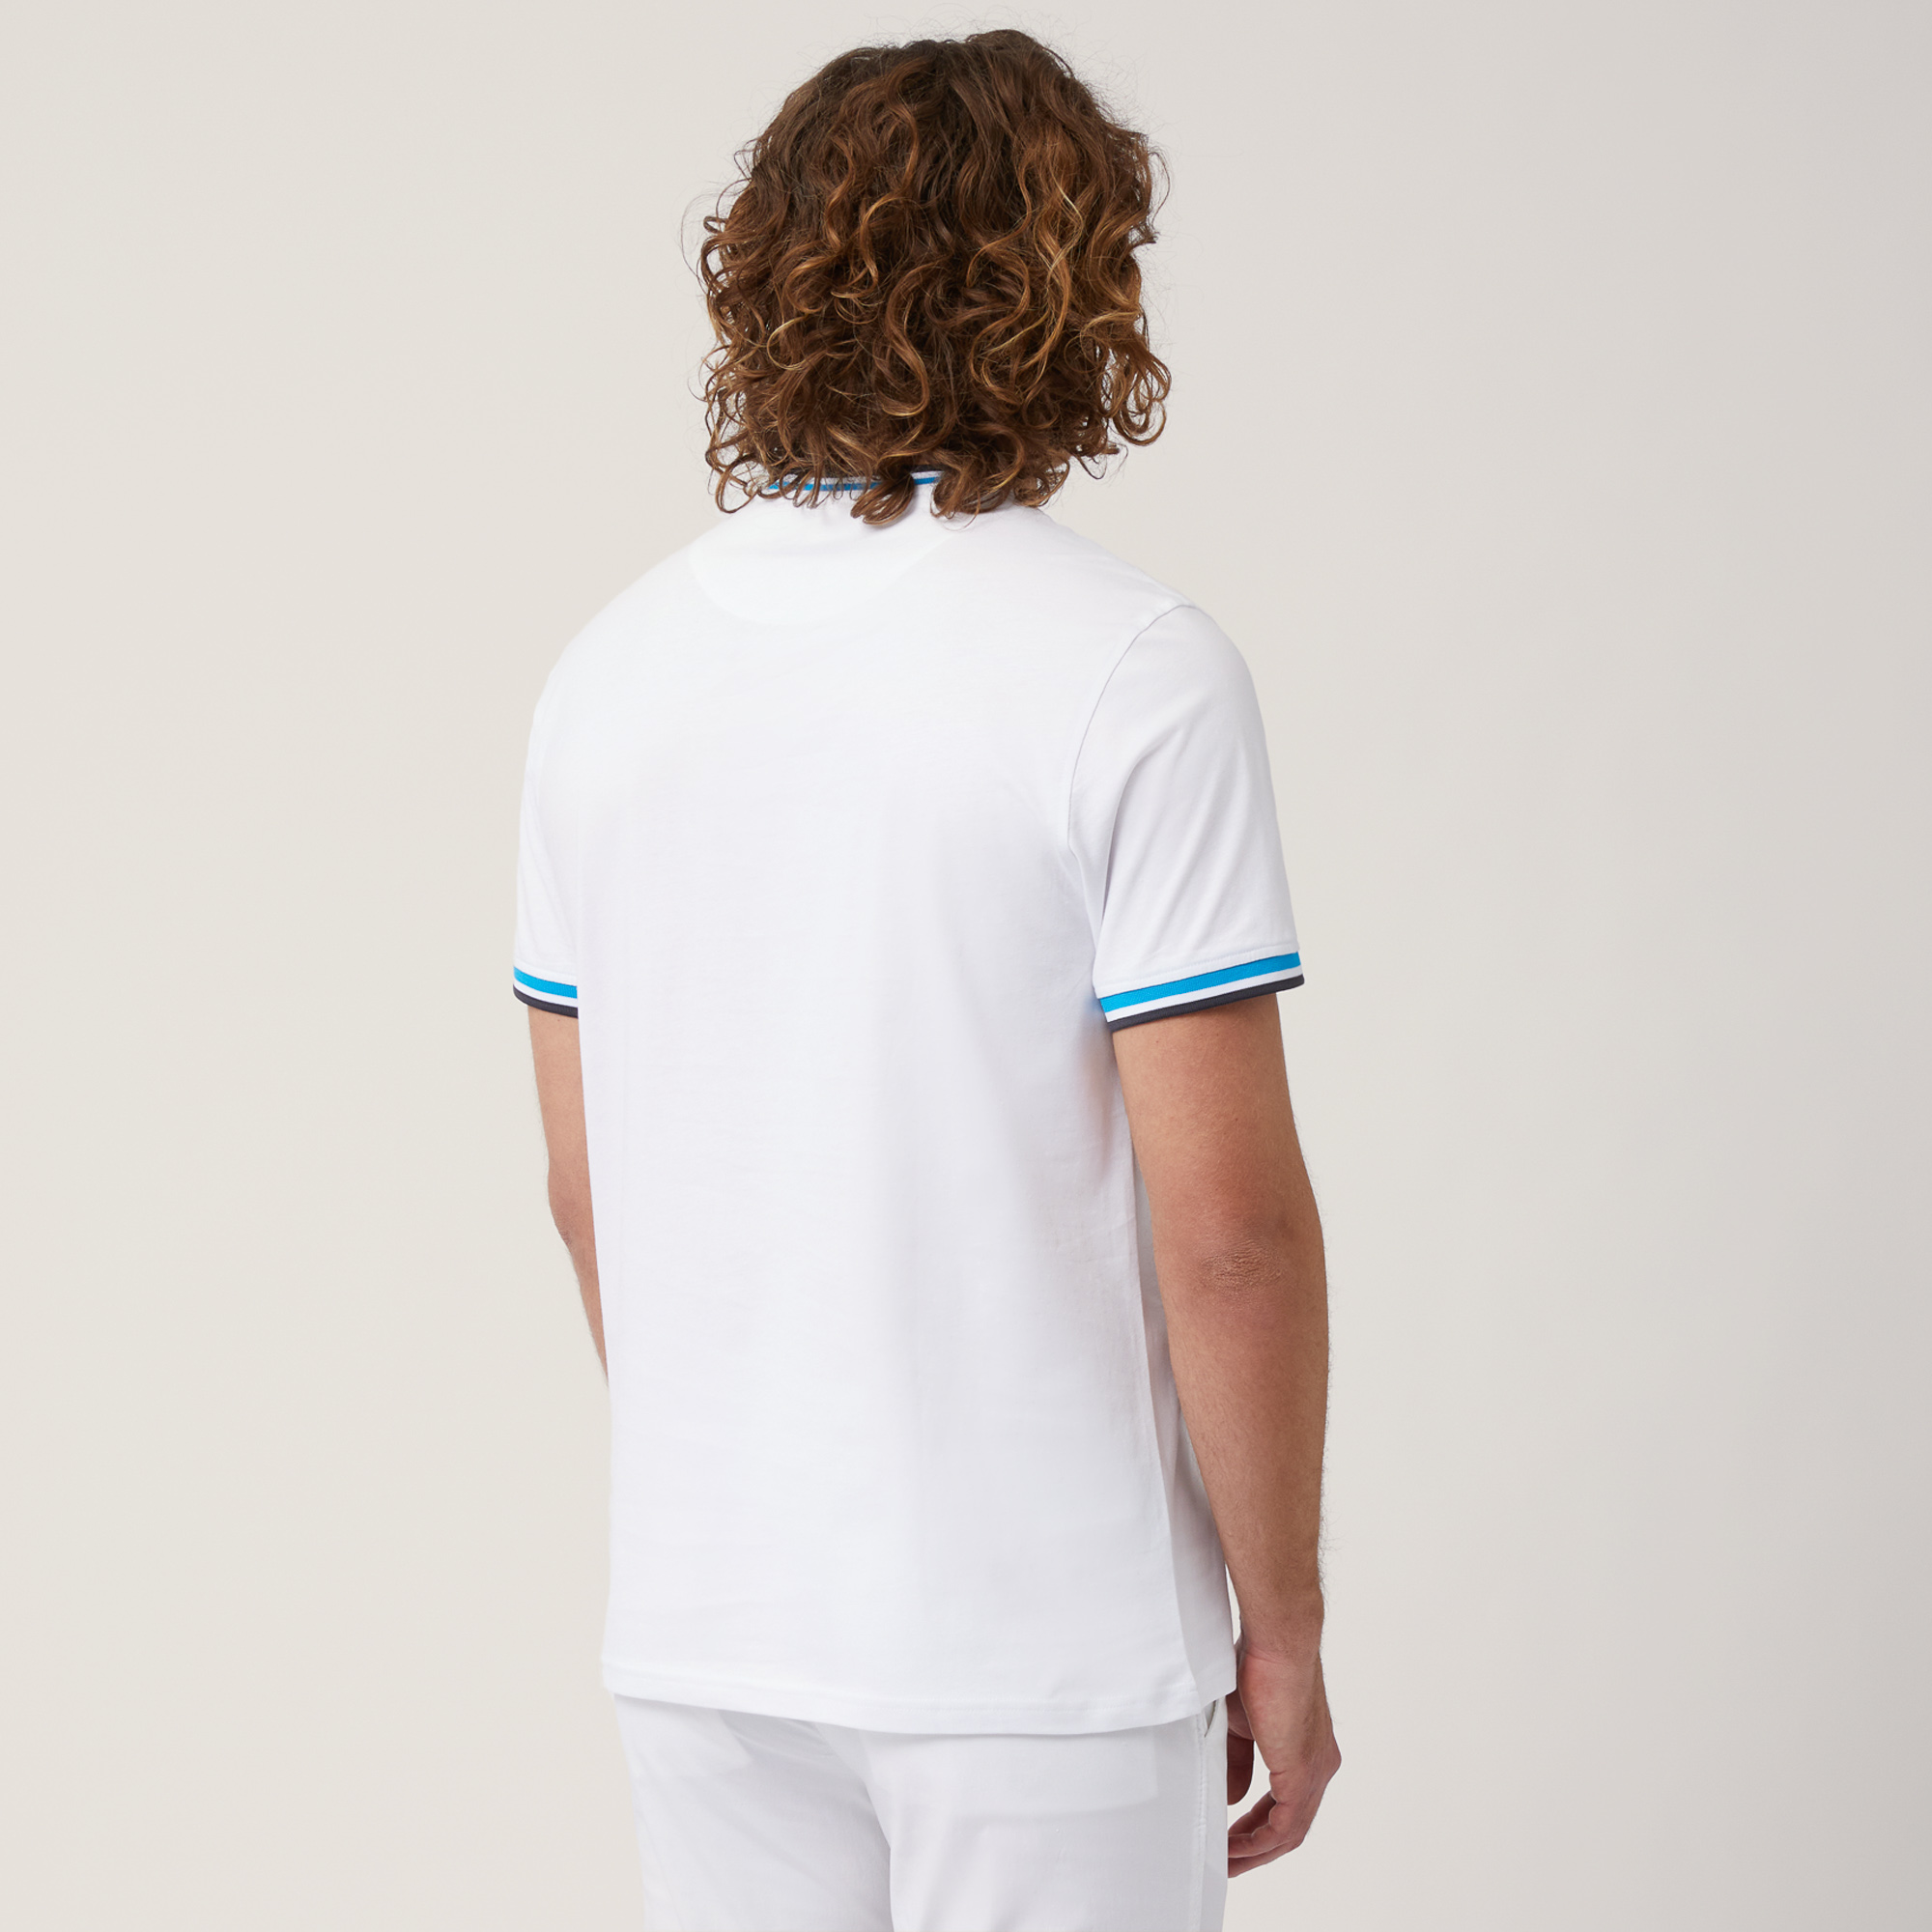 T-Shirt Con Dettagli Rigati, Bianco, large image number 1